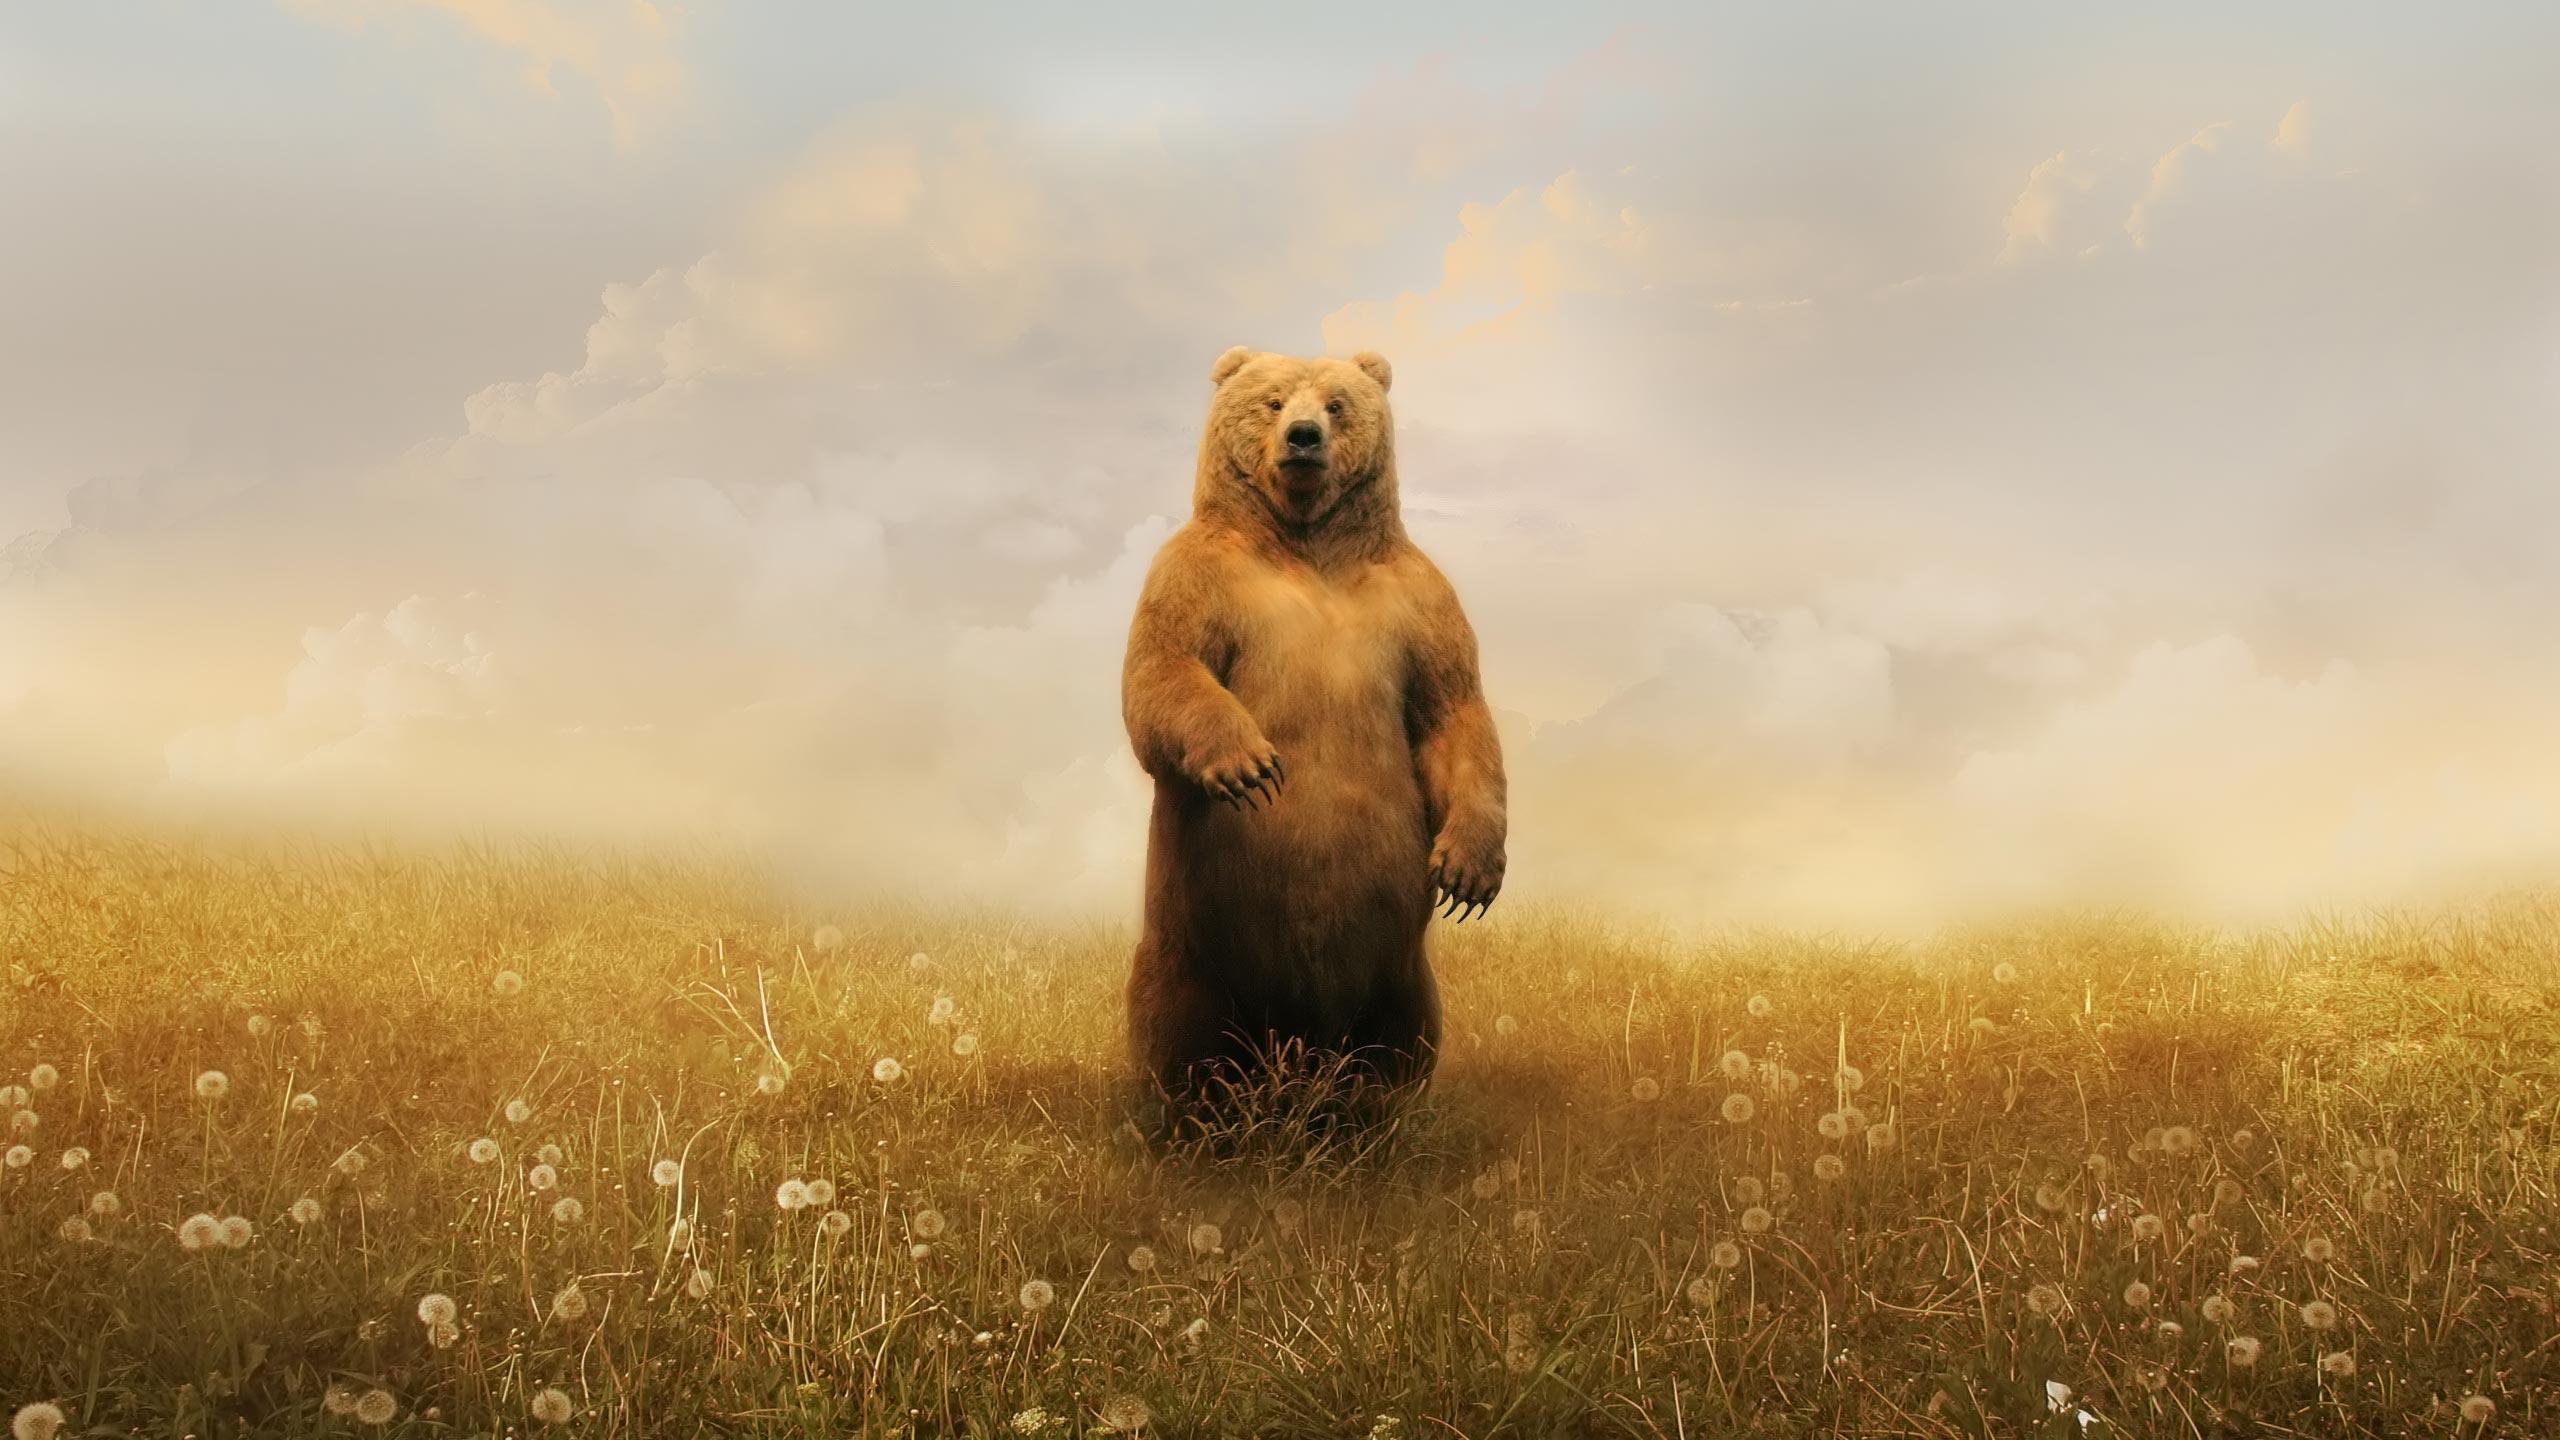 Desktop Wallpaper · Gallery · Windows 7 · Spring bear pc